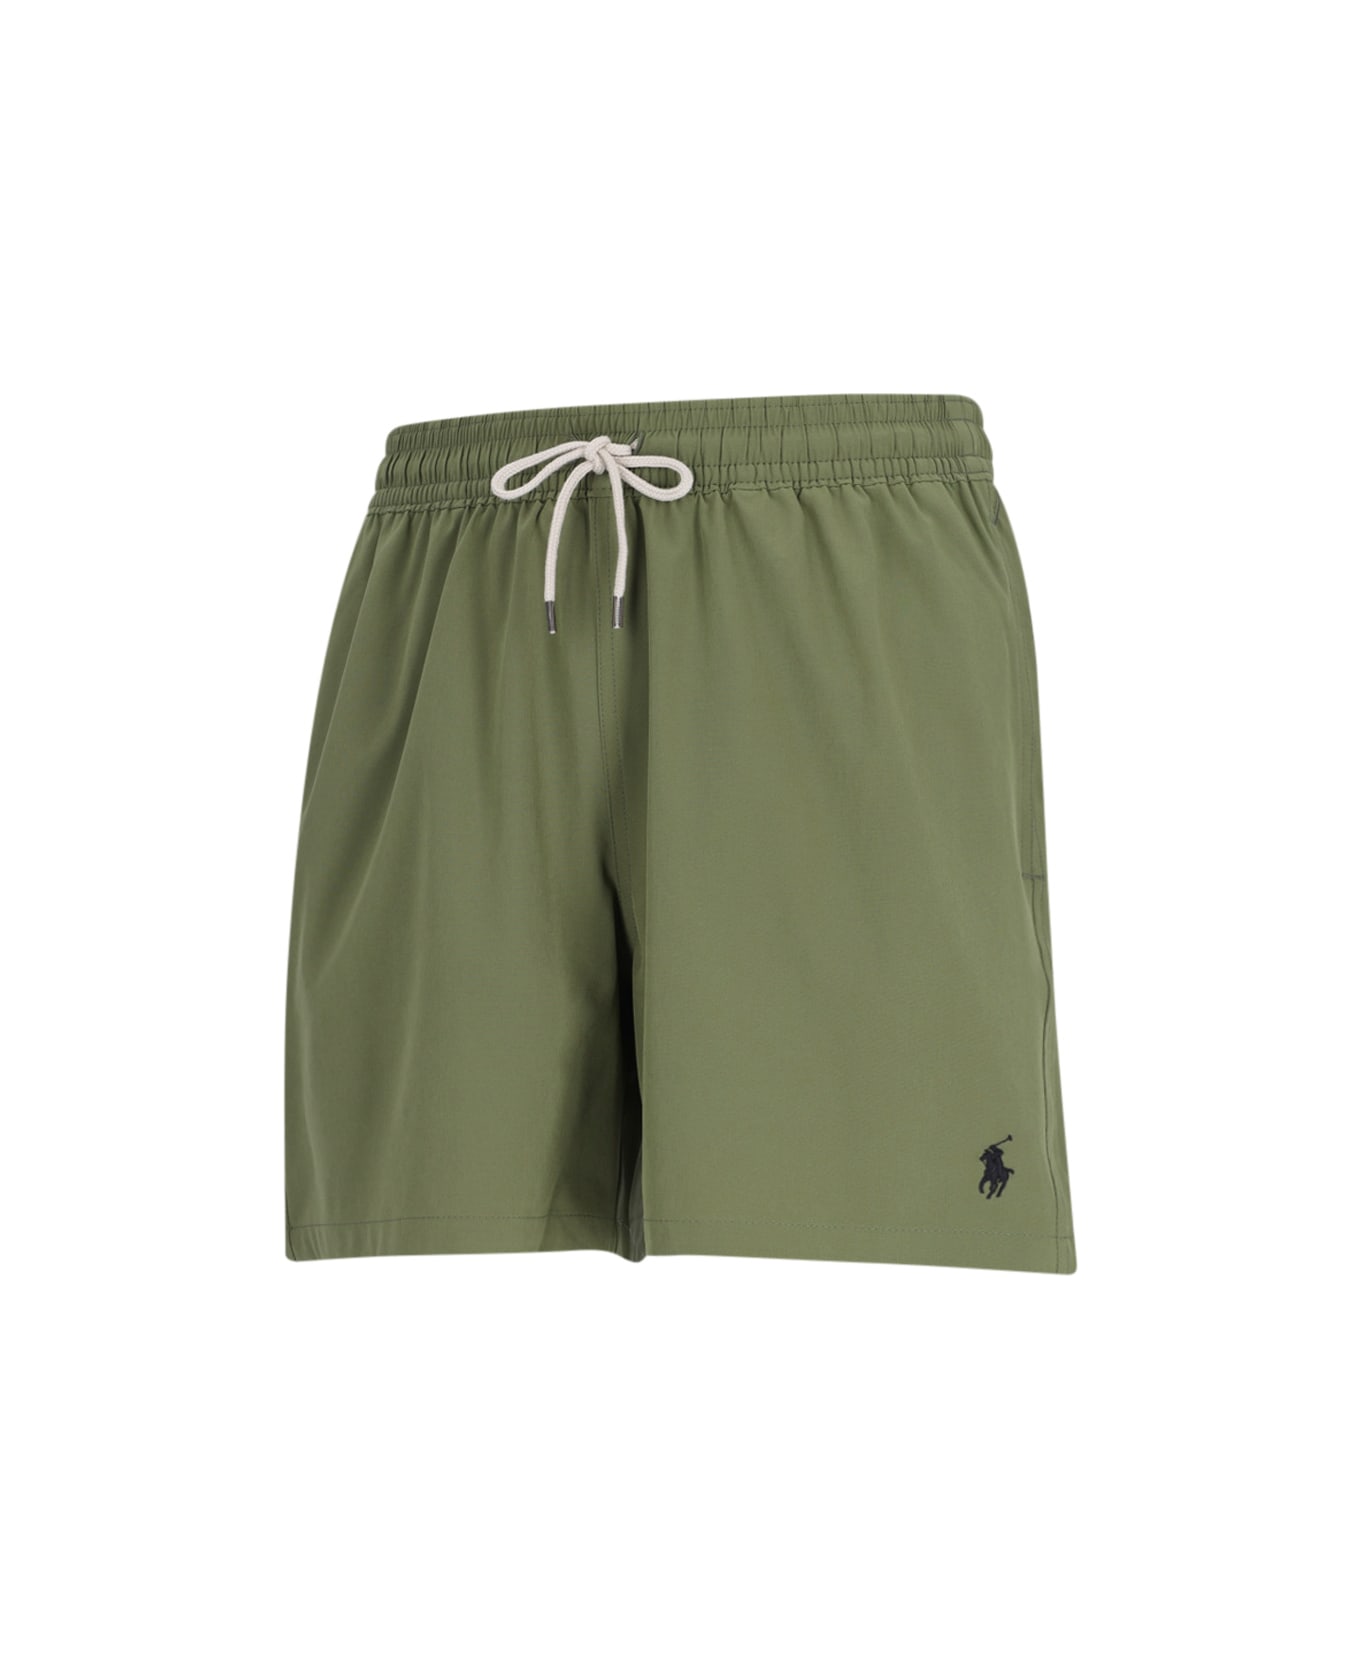 Polo Ralph Lauren 'traveler' Swim Shorts - Sage